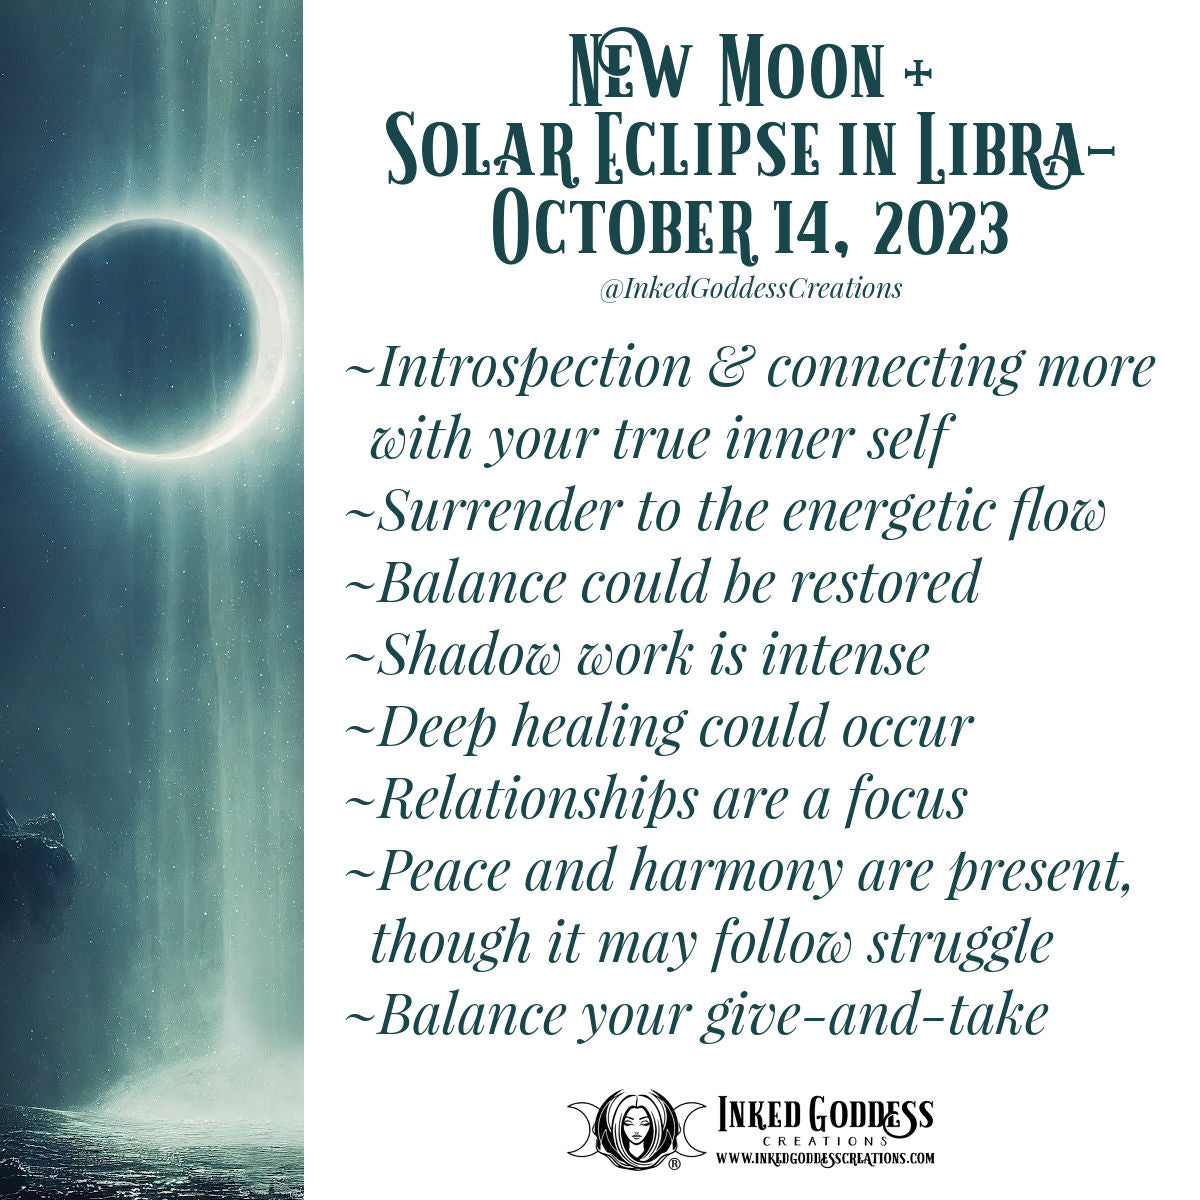 New Moon + Solar Eclipse in Libra- October 14, 2023